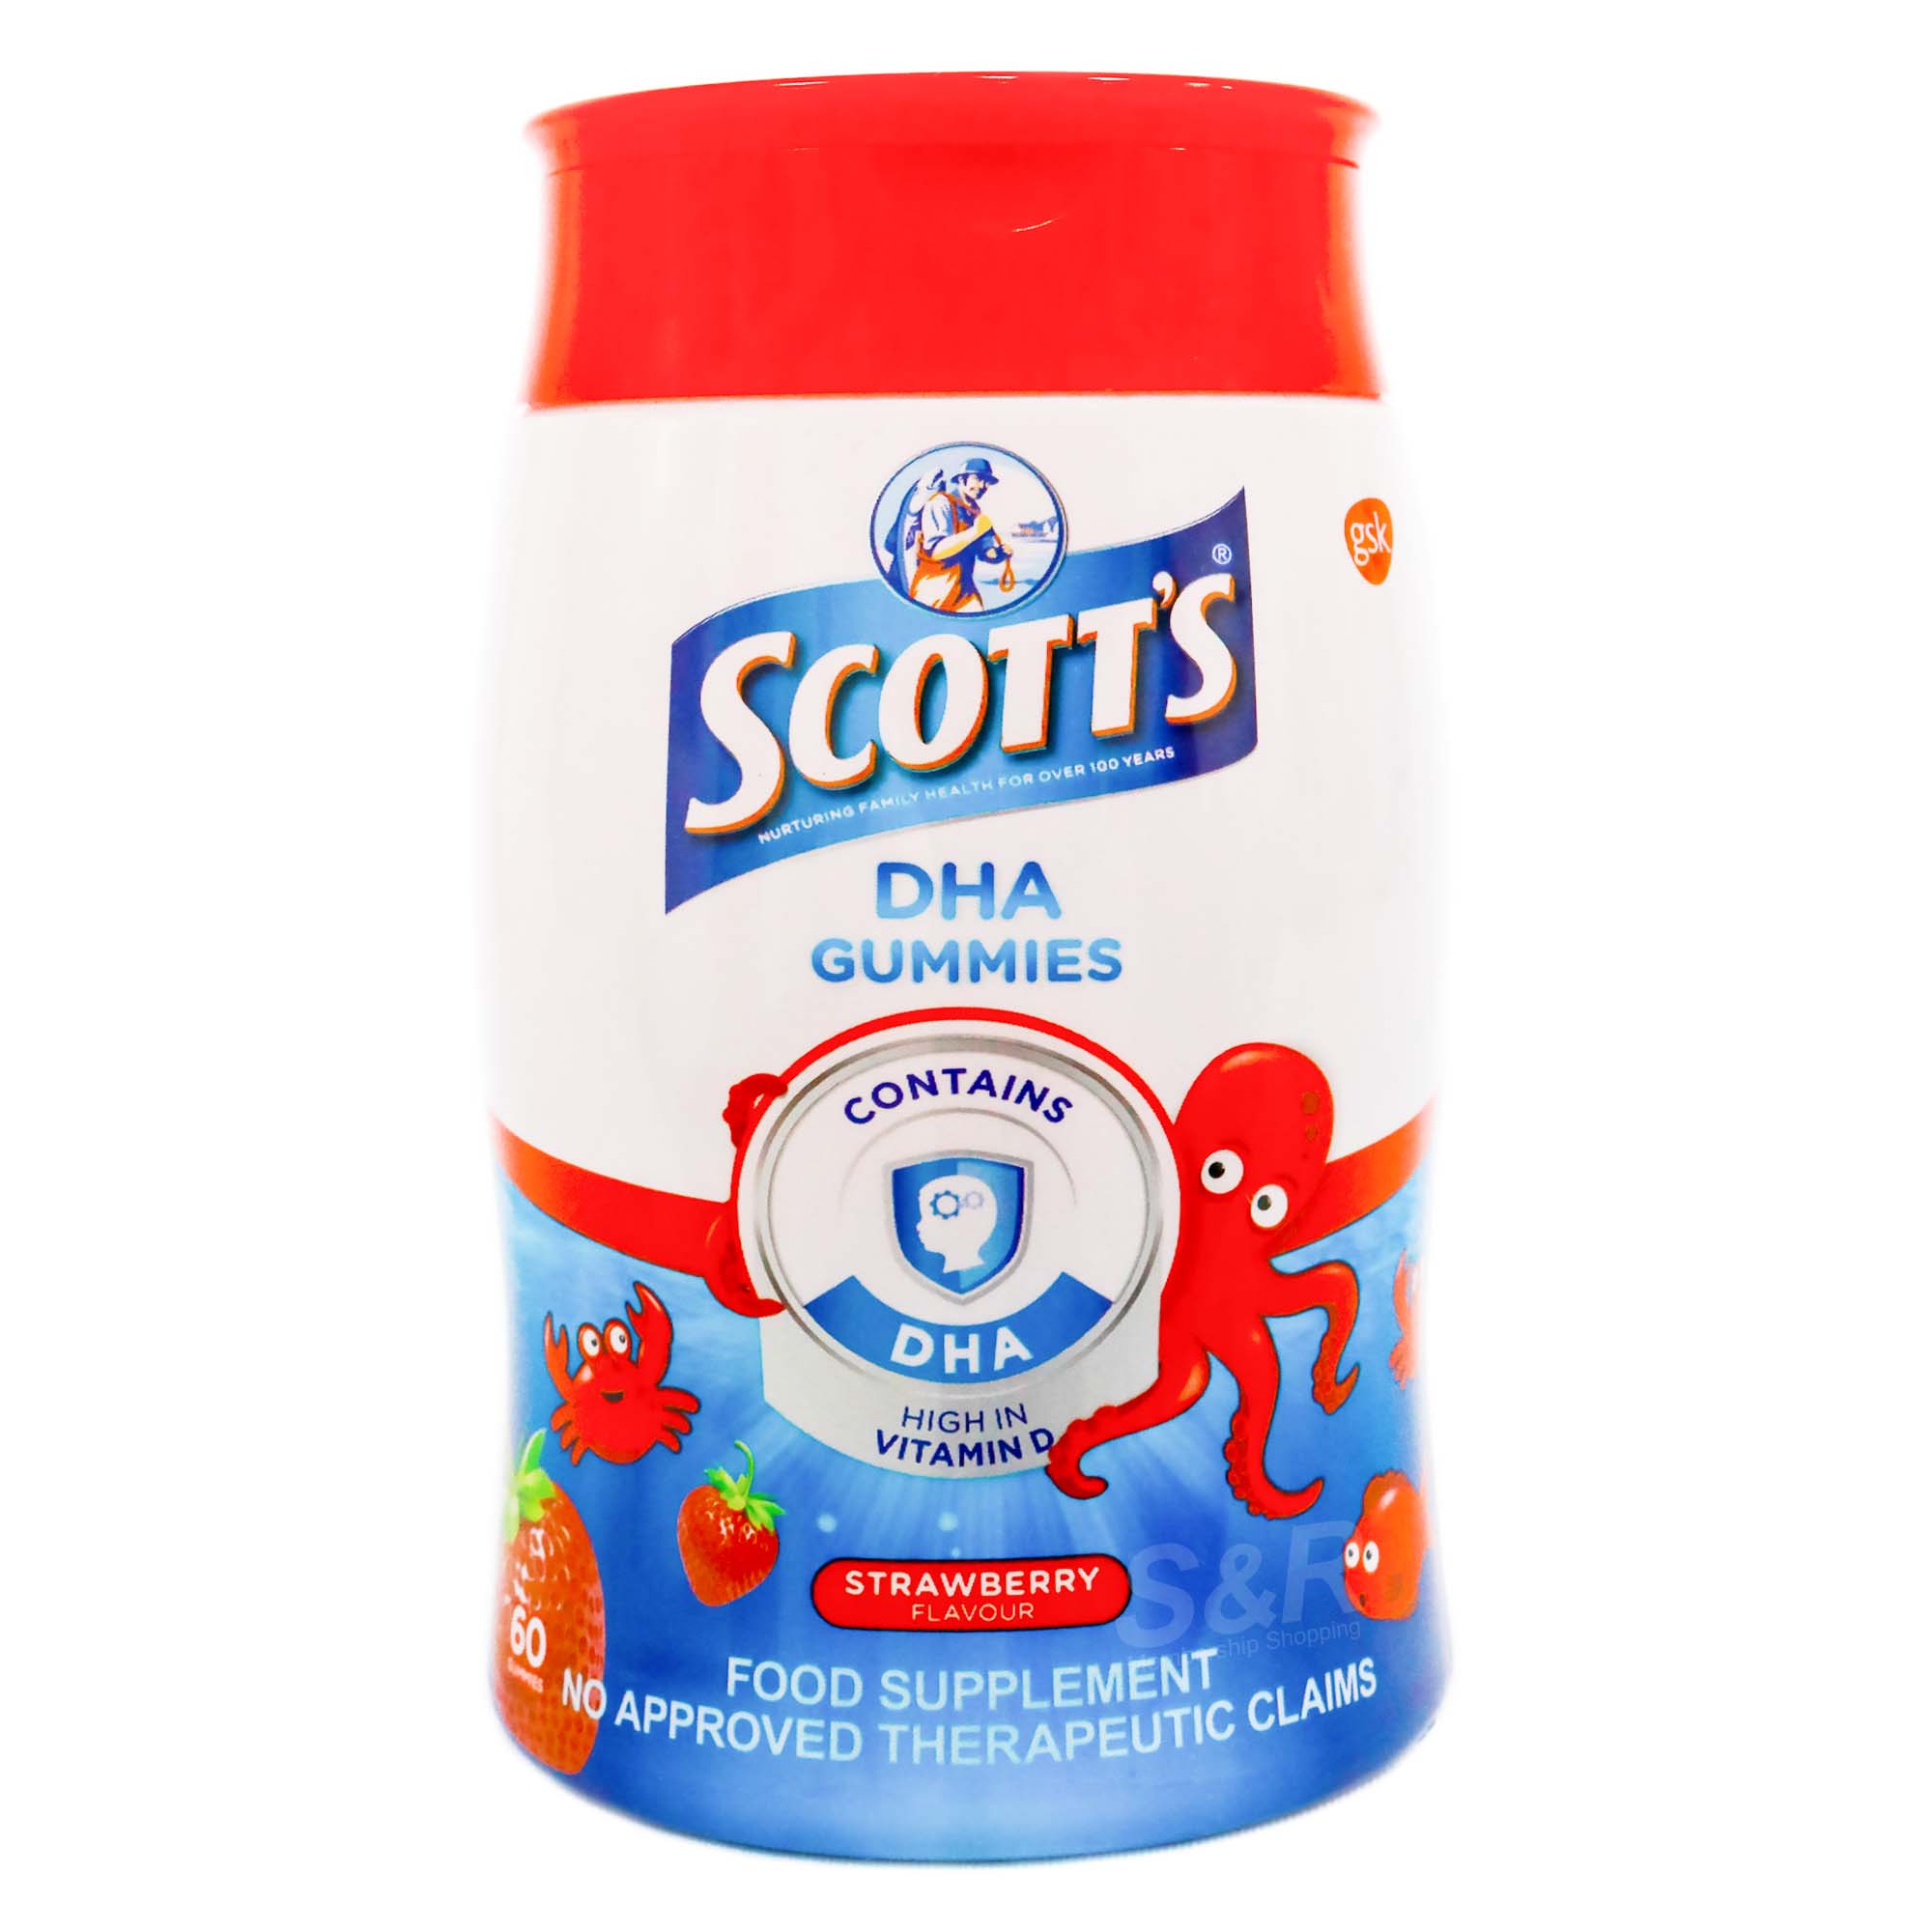 Scott’s DHA Gummies Strawberry Flavor 60pcs